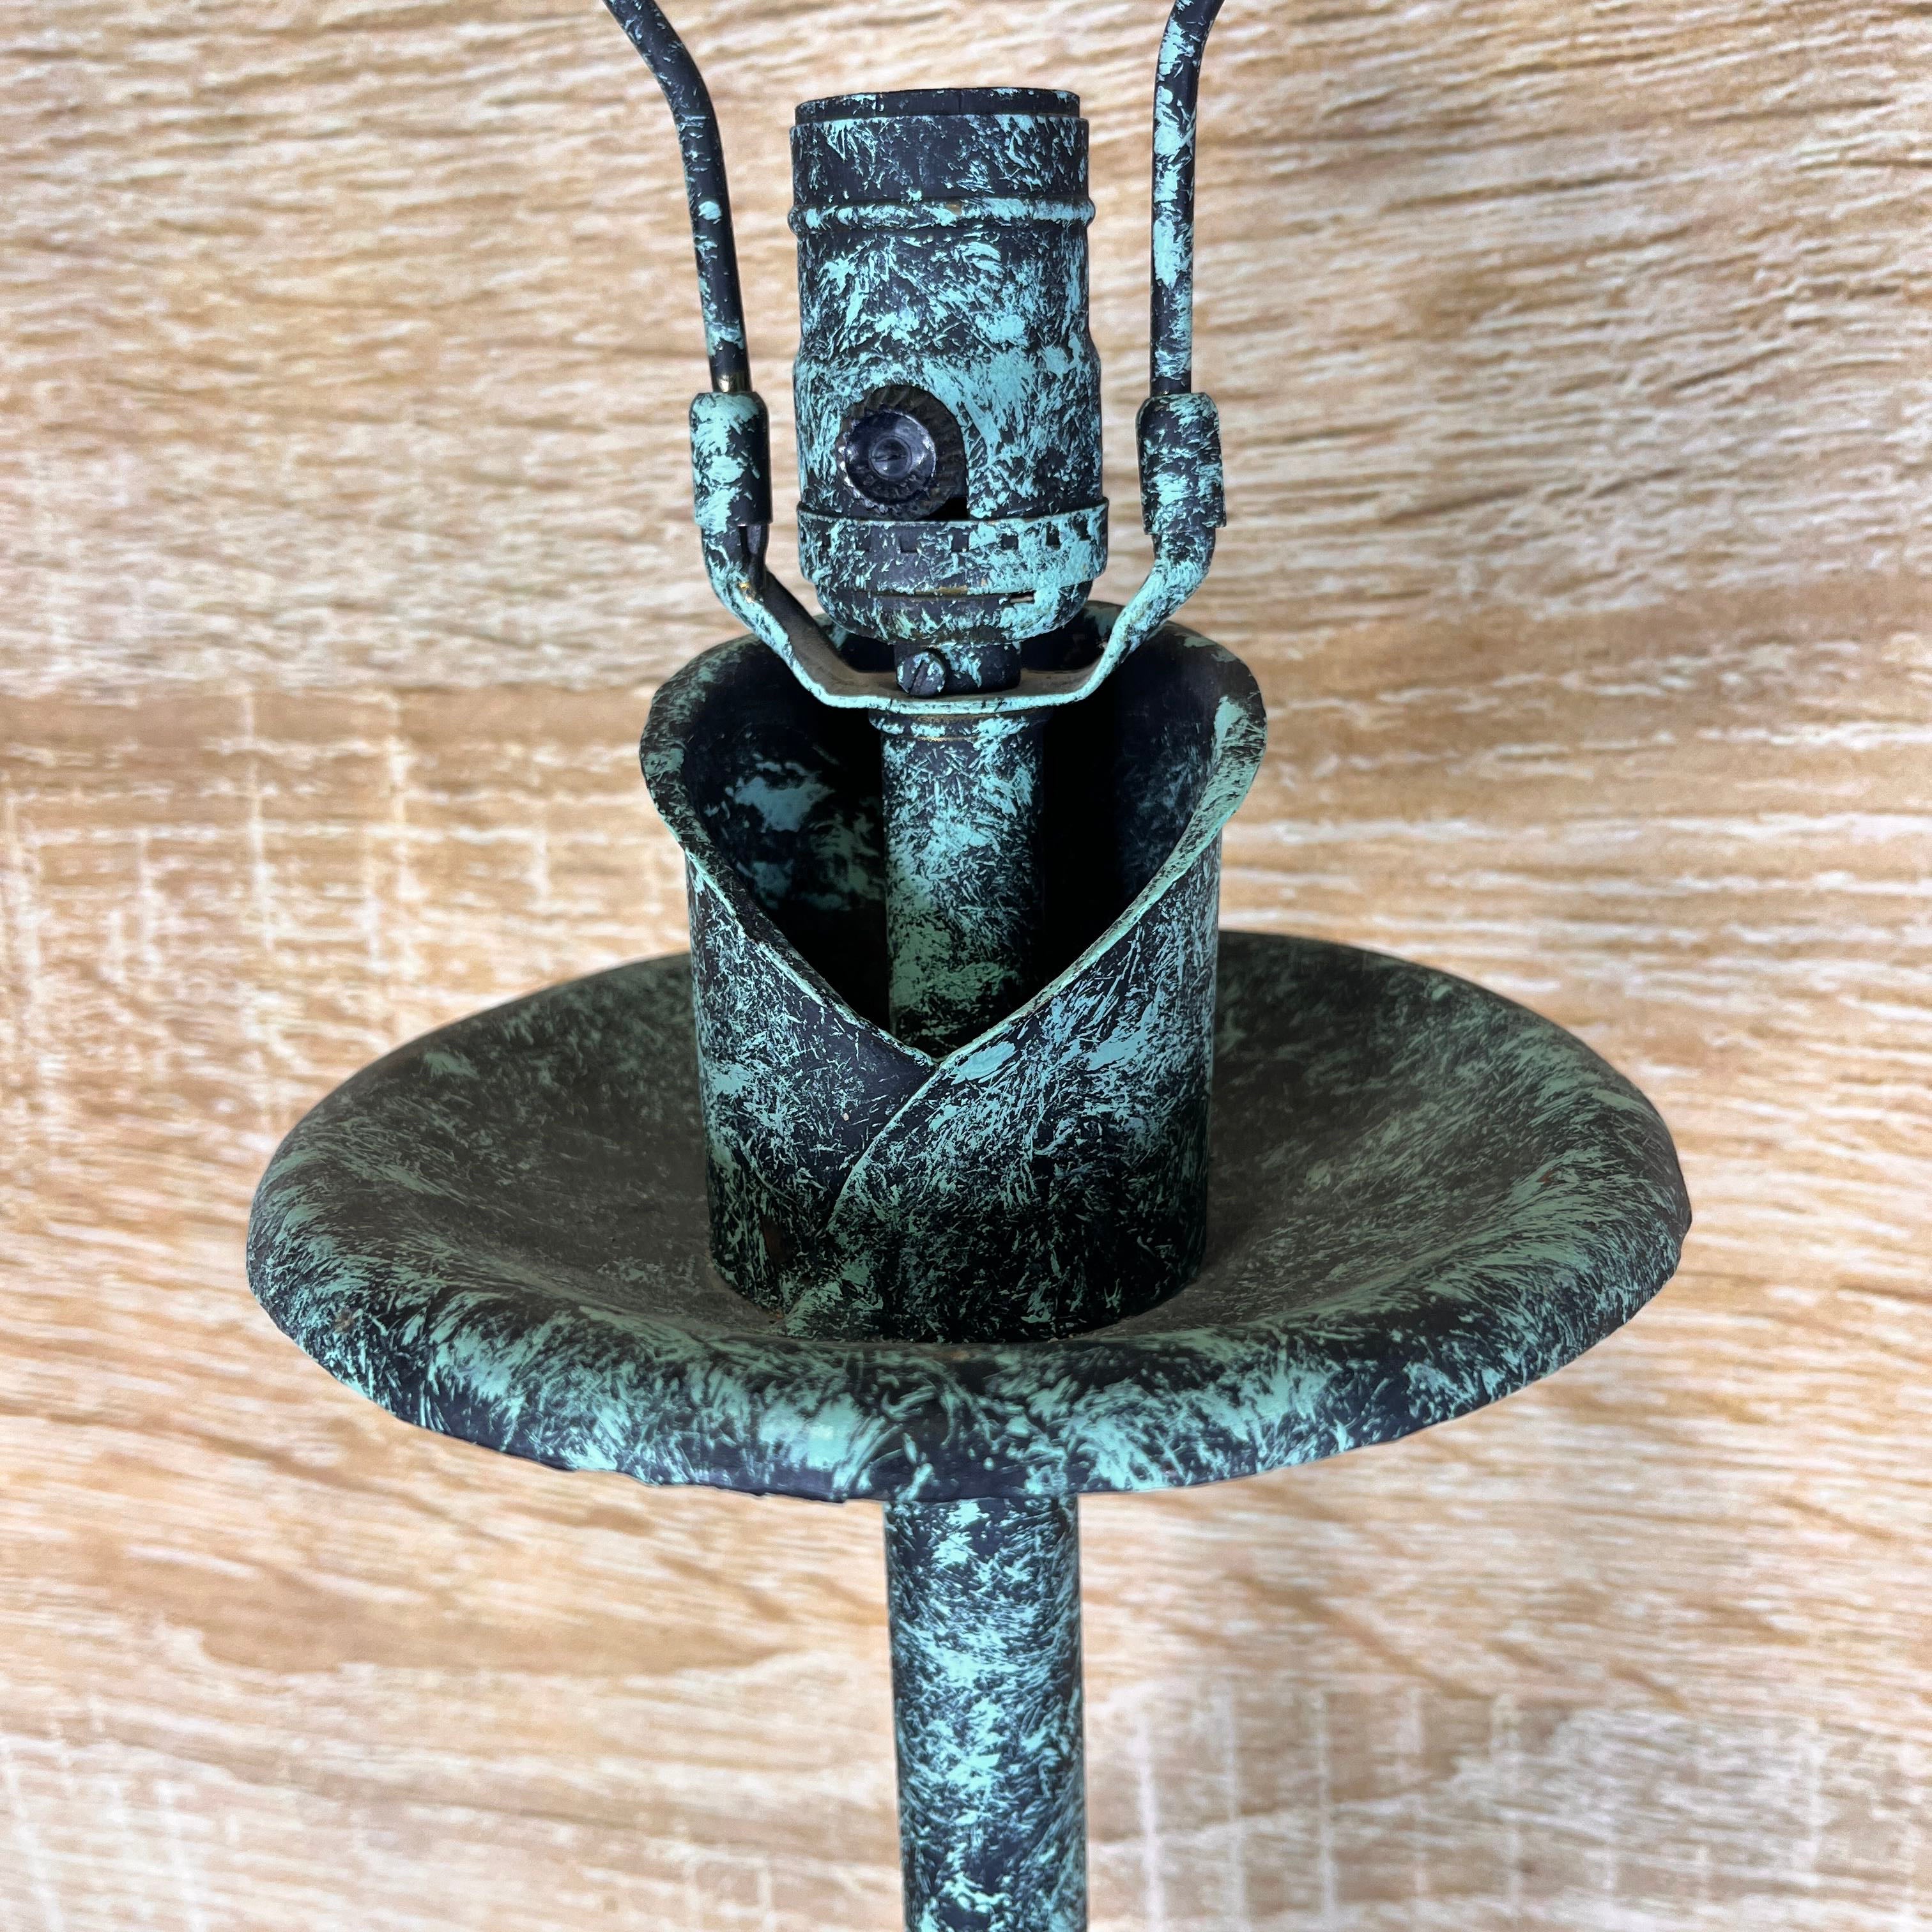 Gothic Spanish Revival Wrought Iron Gavanized Table Lamp